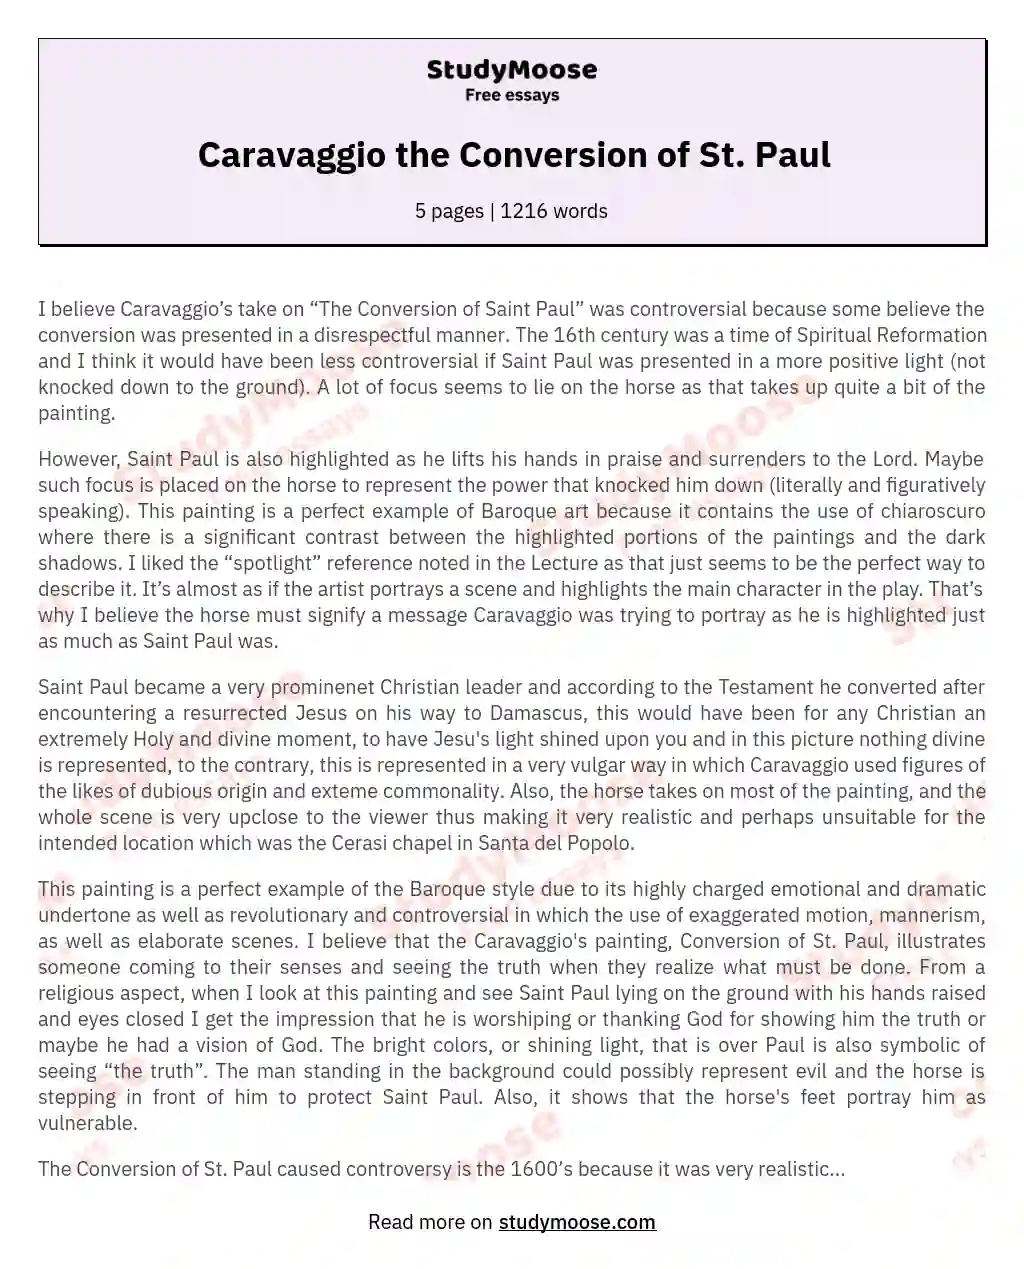 Caravaggio the Conversion of St. Paul essay